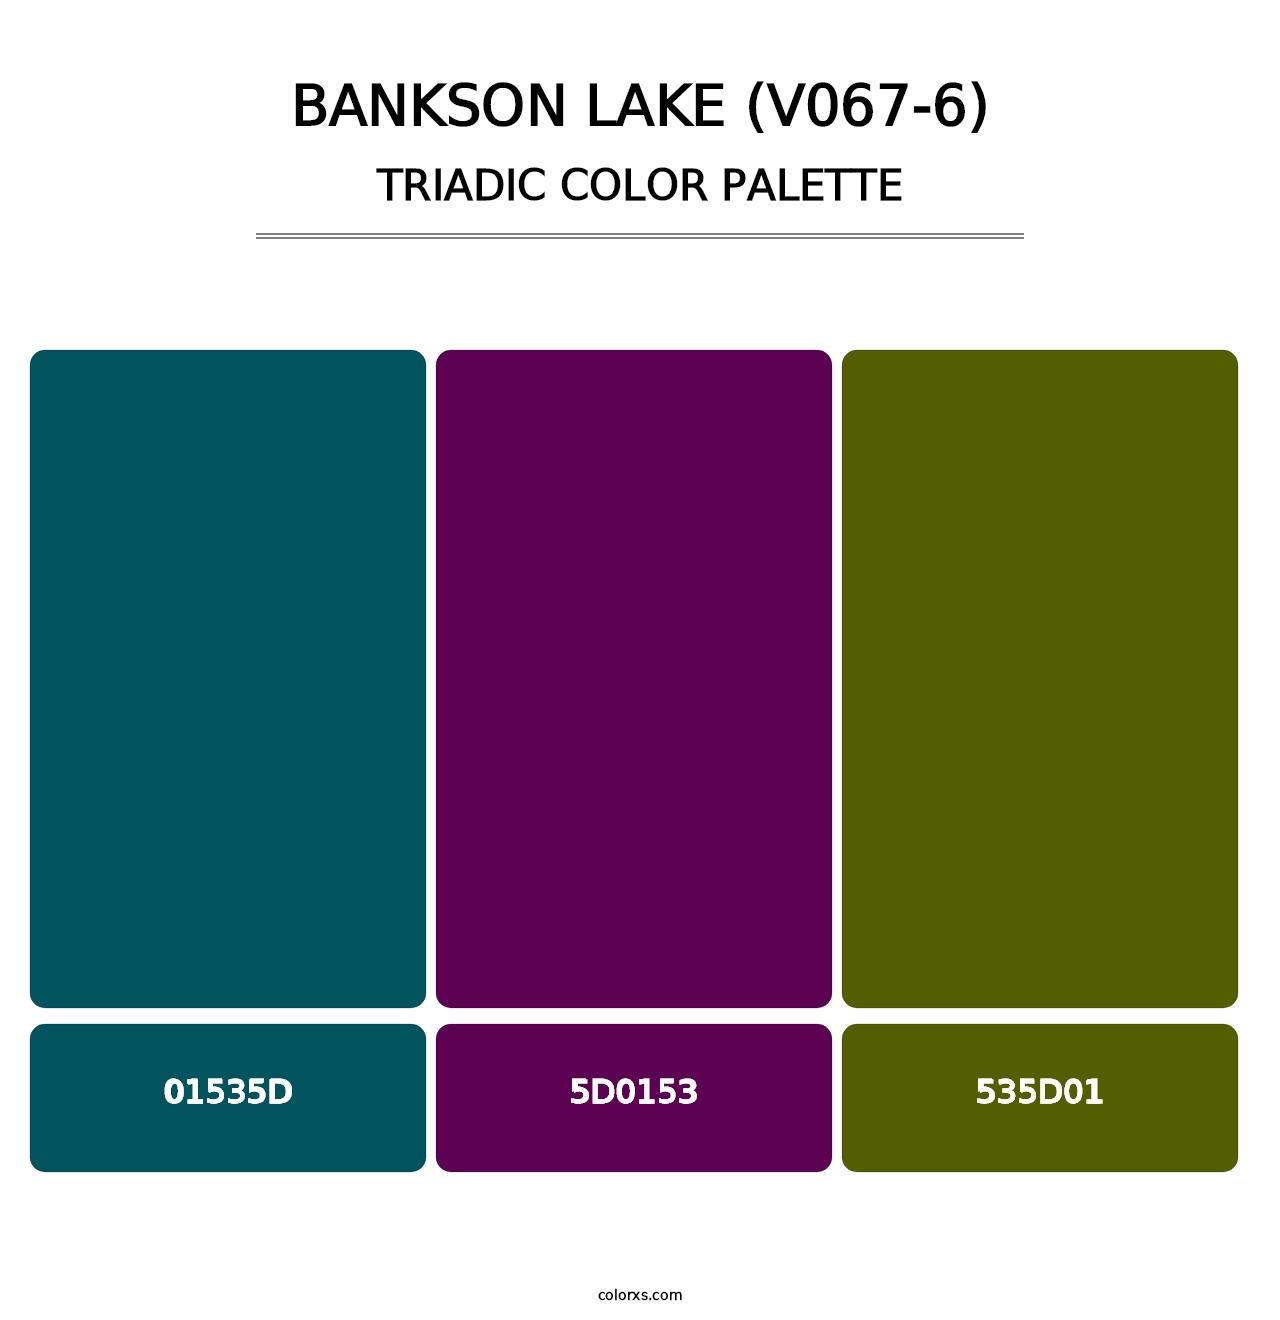 Bankson Lake (V067-6) - Triadic Color Palette